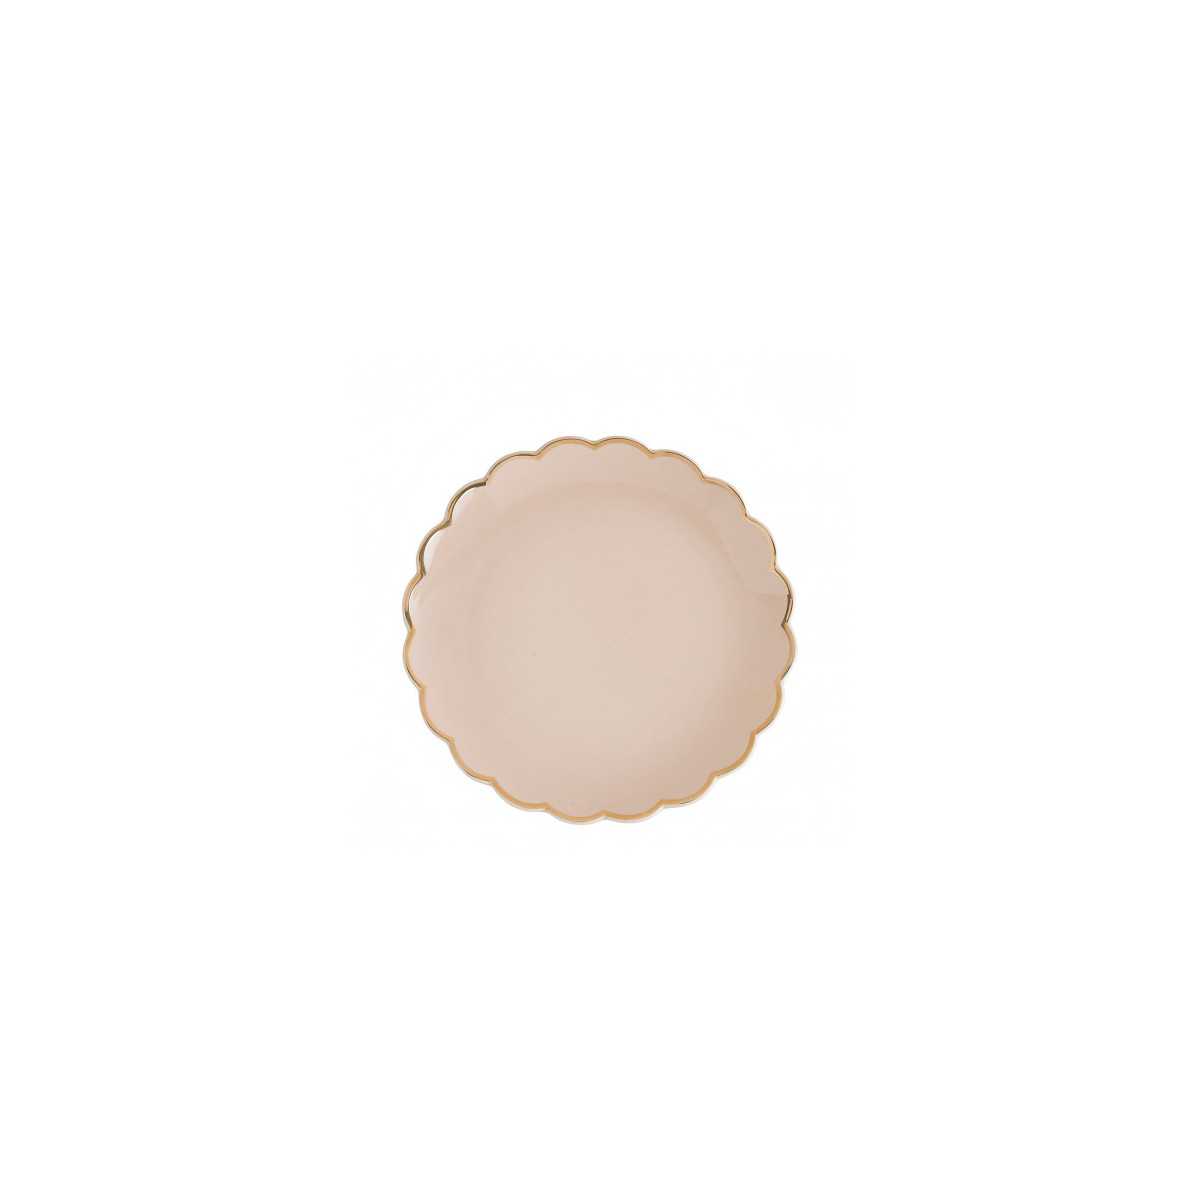 INTERIEUR- DECORATION|Marguerite Dessert Plate - GoldenMATHILDE MAssiettes